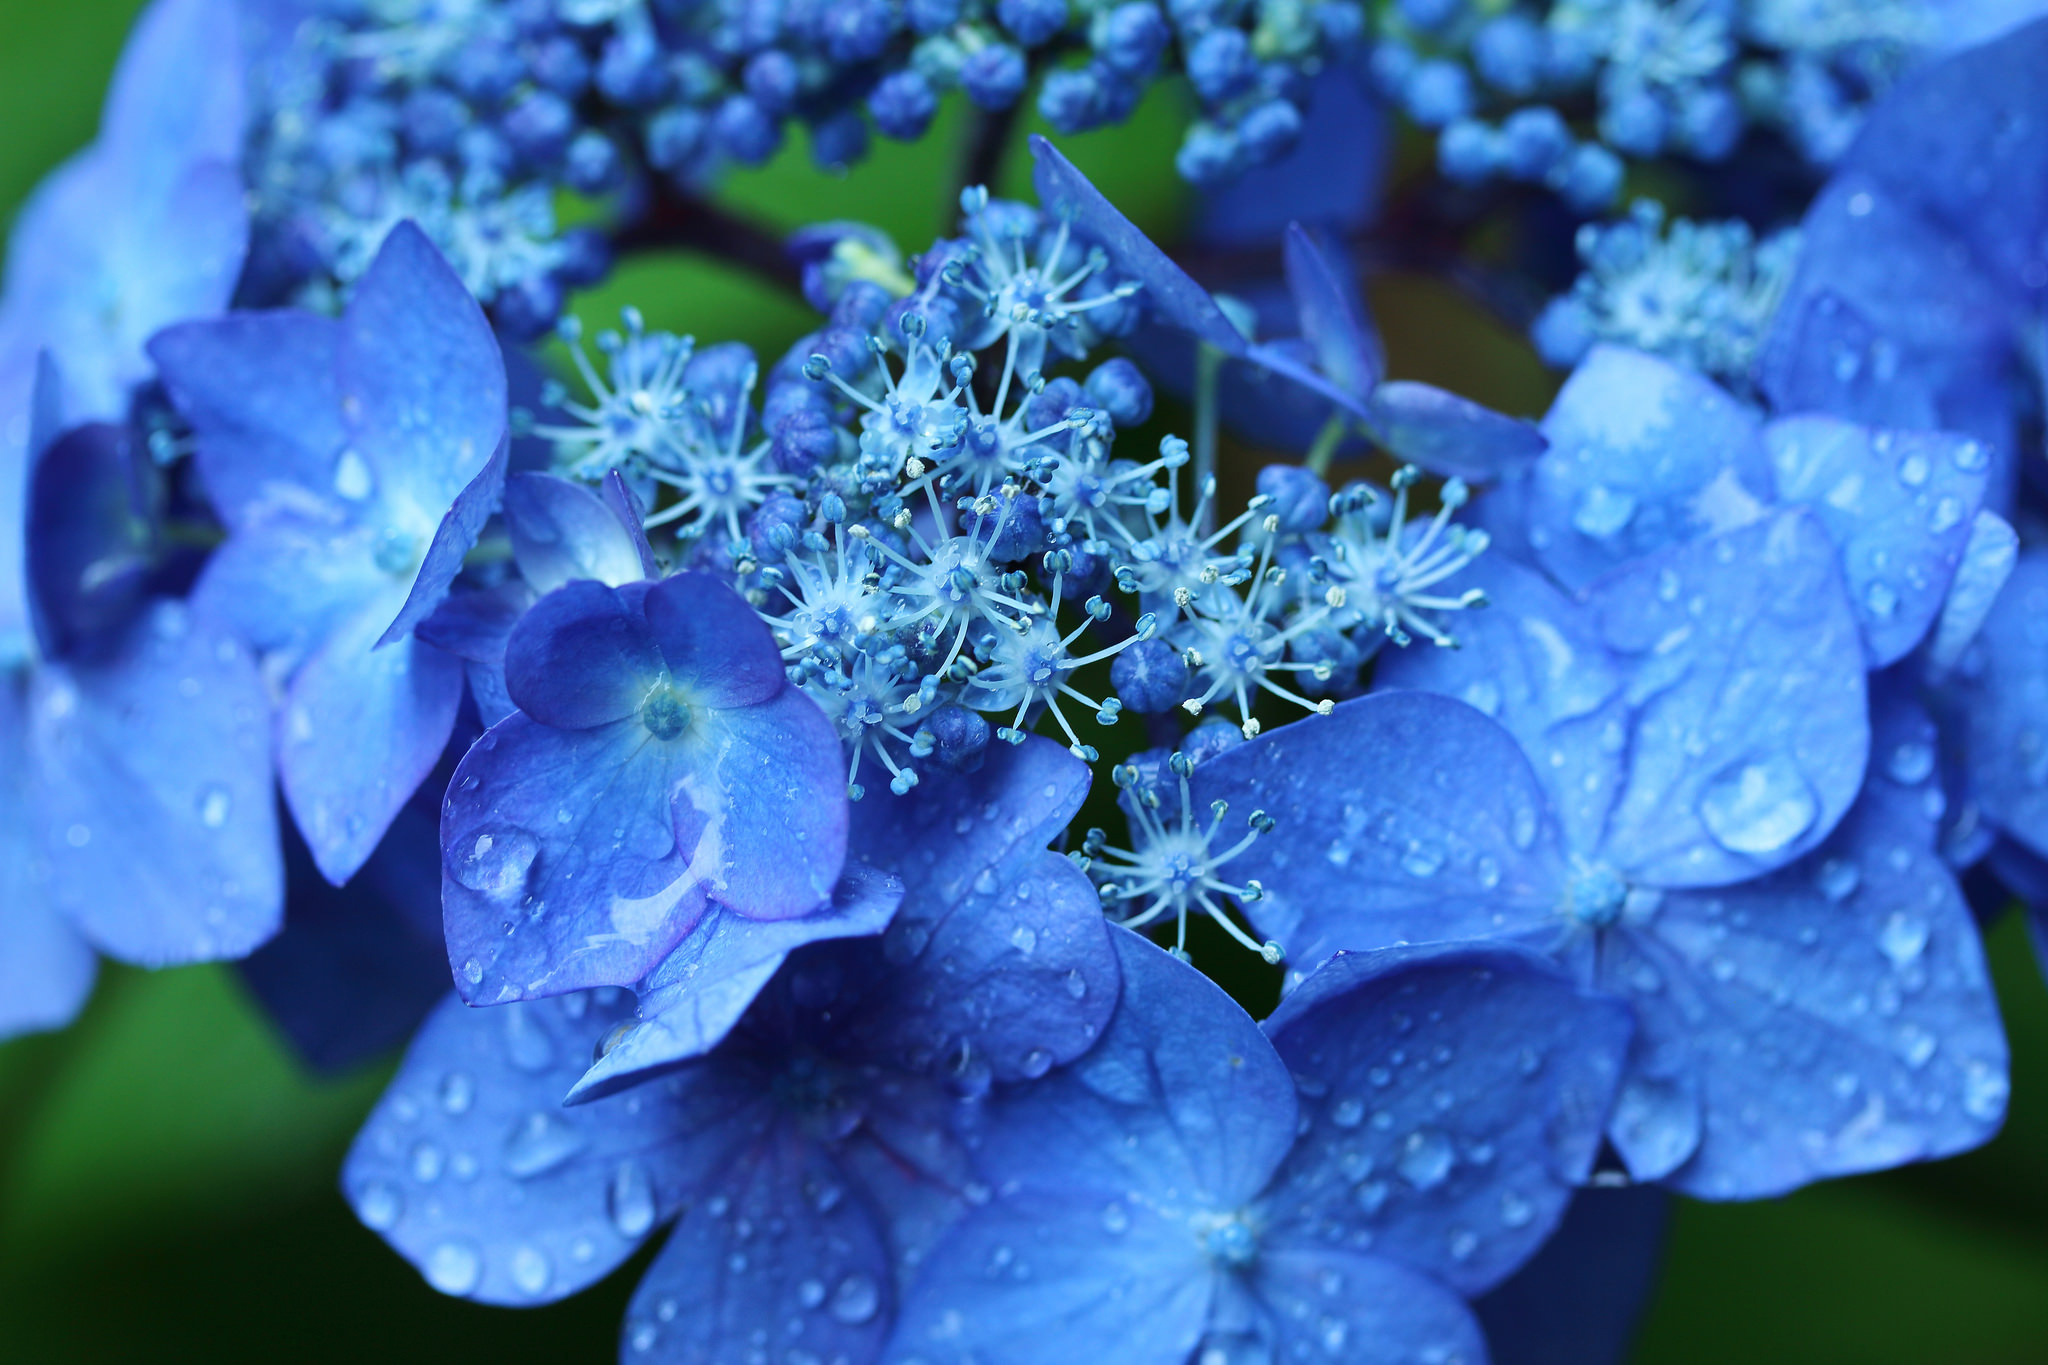 Descarga gratis la imagen Naturaleza, Flores, Flor, Hortensia, Tierra/naturaleza, Gota De Agua, Macrofotografía, Flor Azul en el escritorio de tu PC